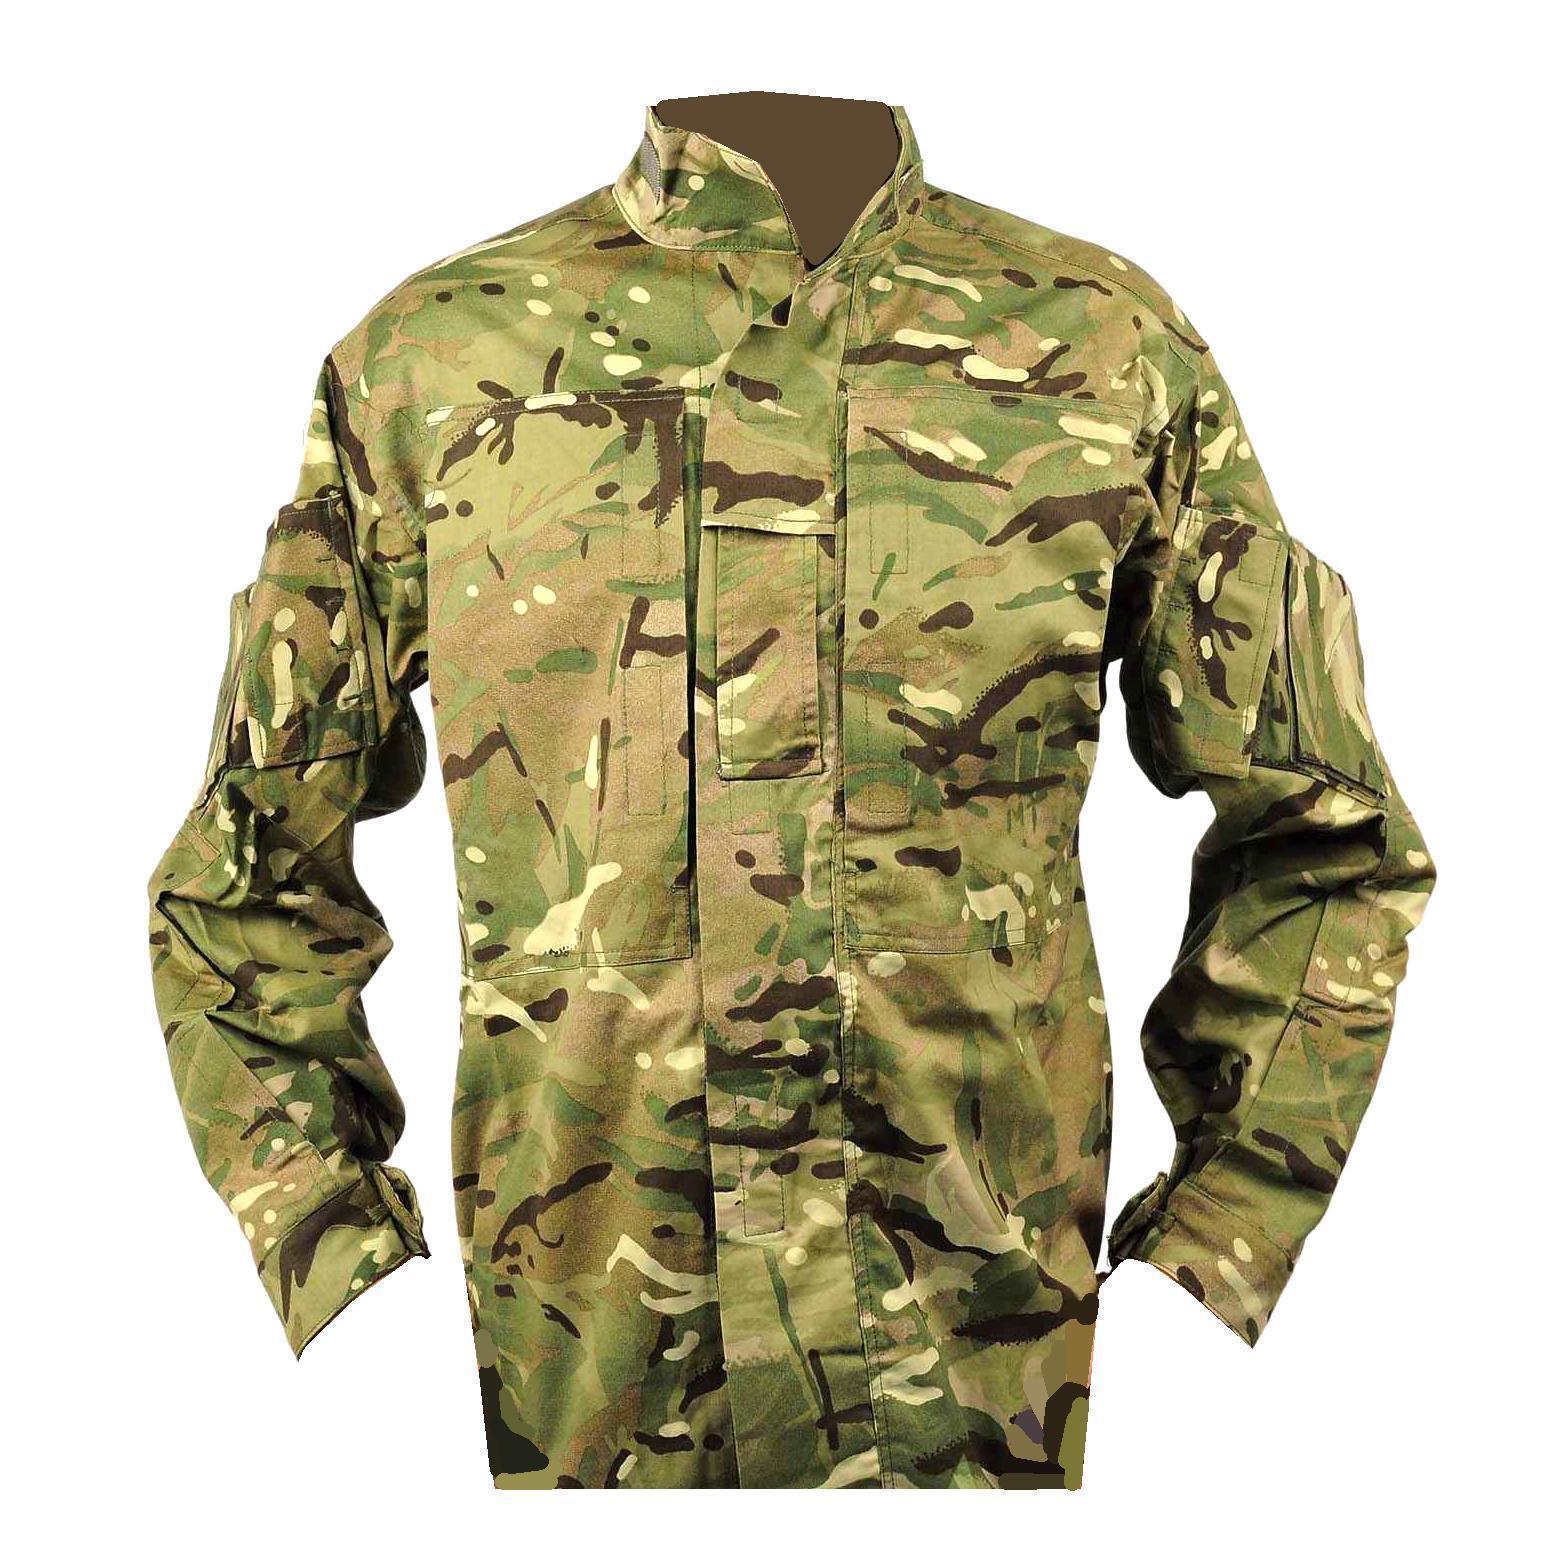 Genuine British Army PCS Issue Lightweight Combat Jacket MTP Camo Cadet Uniform